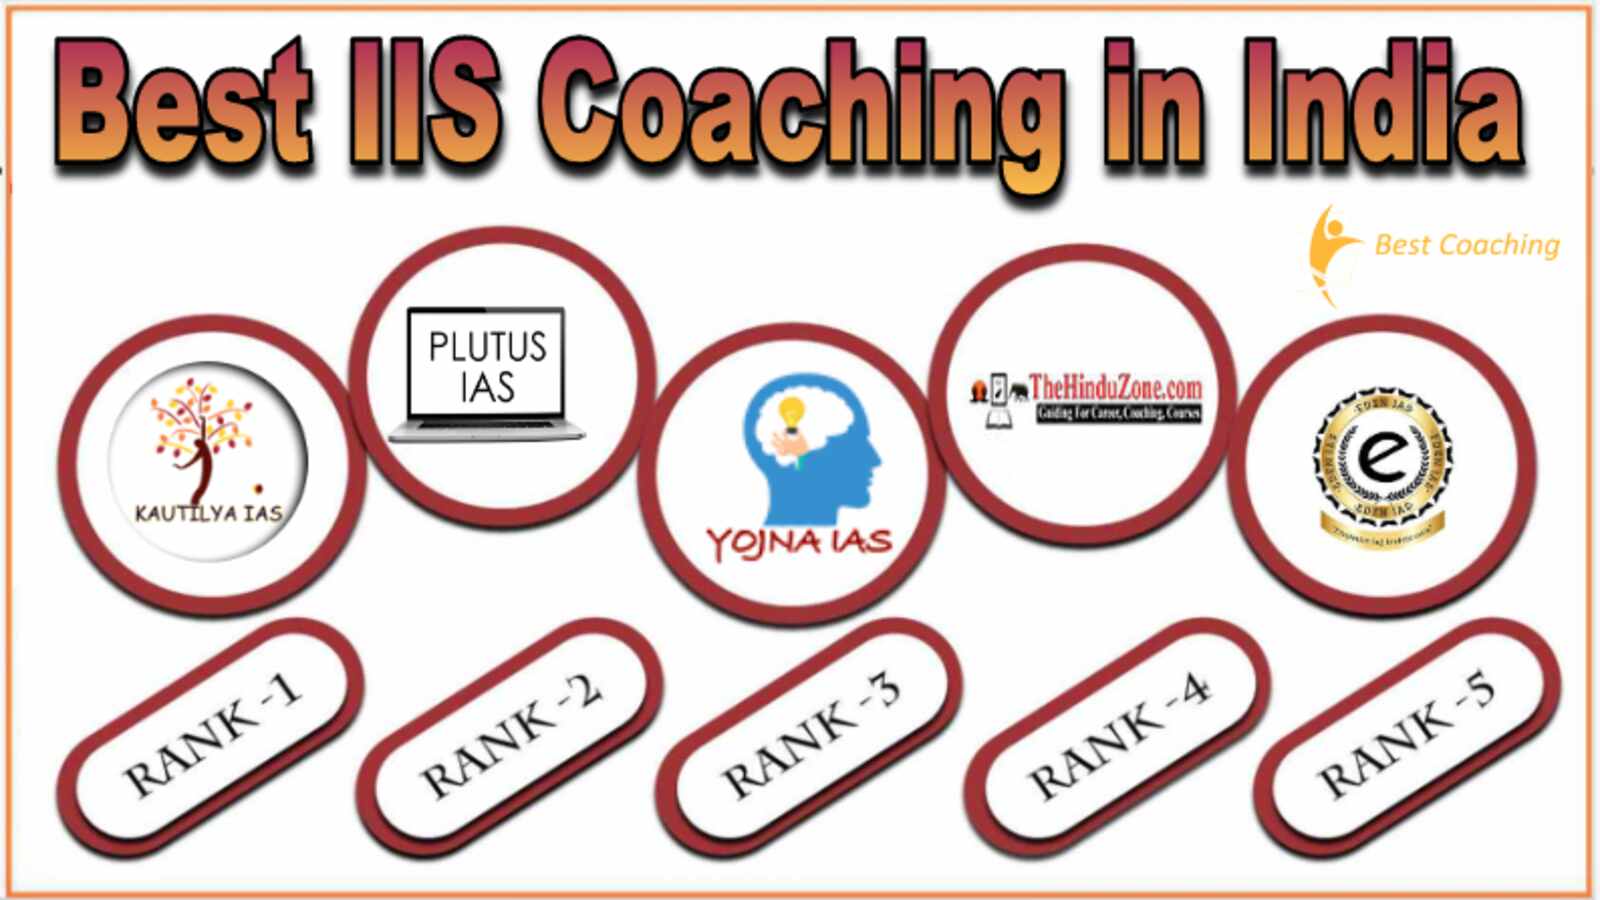 Best IIS Coaching in India